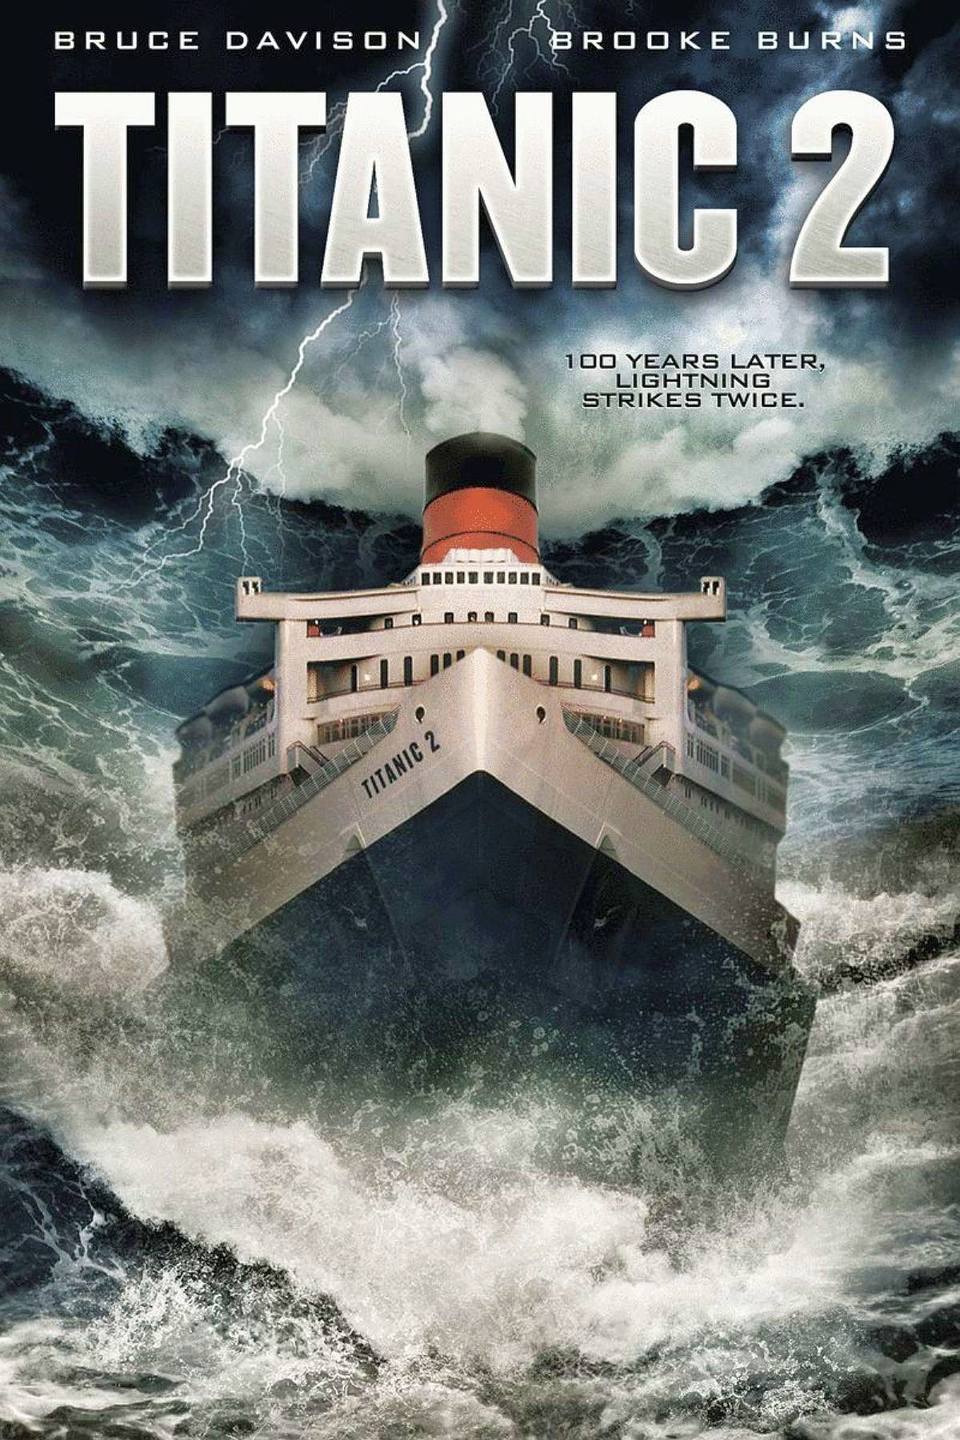 Film Titanic: Historie se opakuje